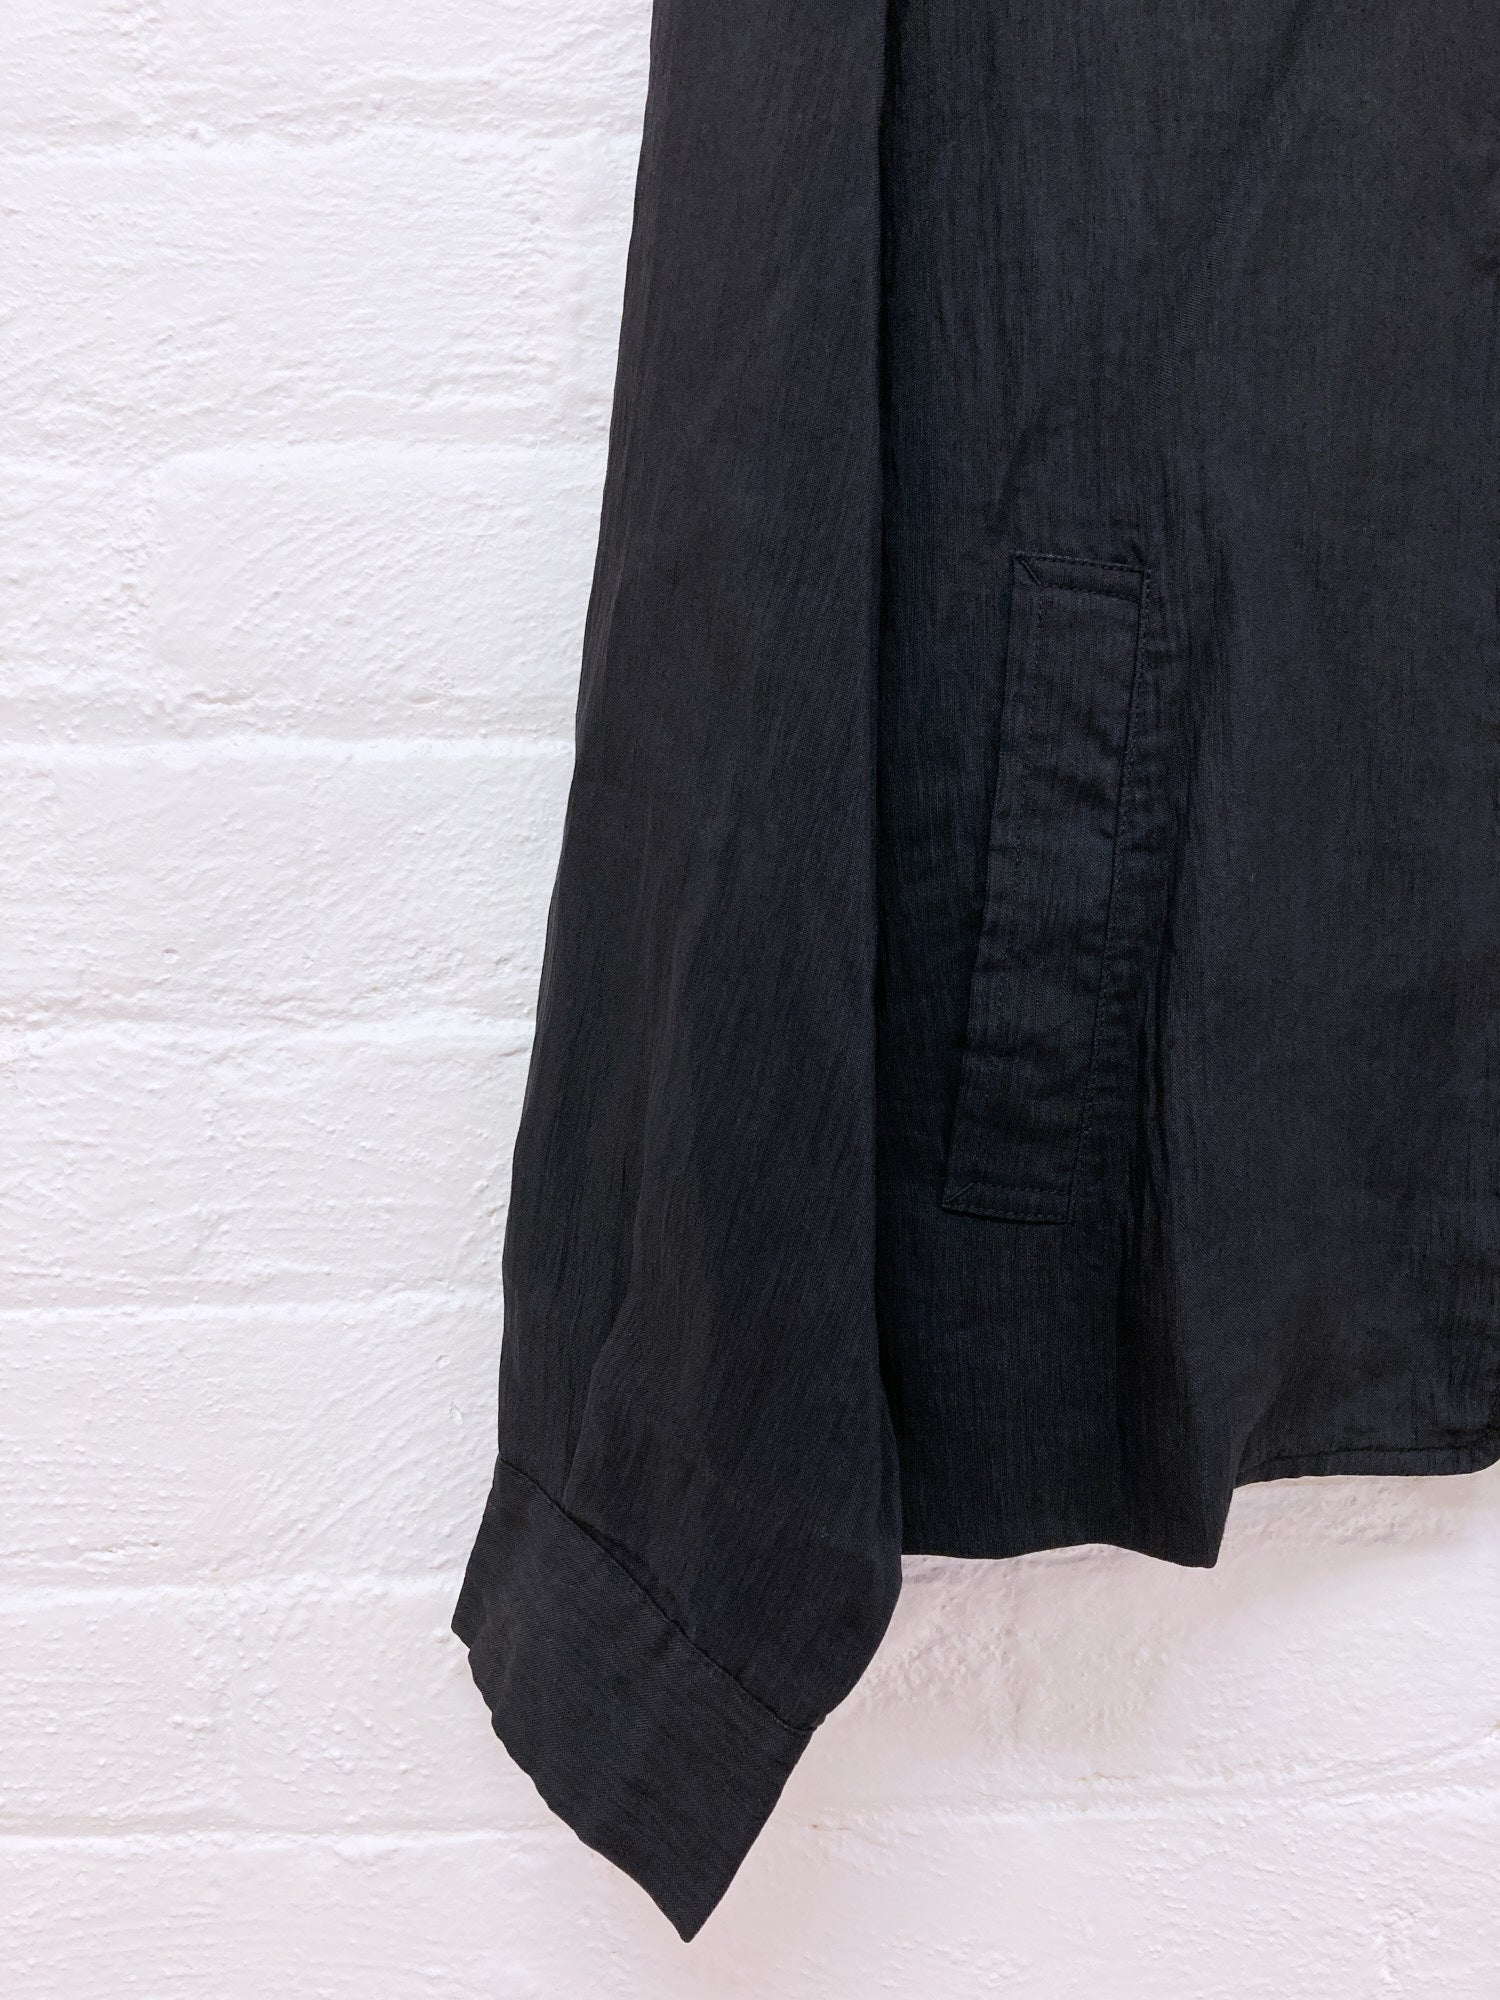 Giuliano Fujiwara 1980s creased black collar cutout zip jacket - size M